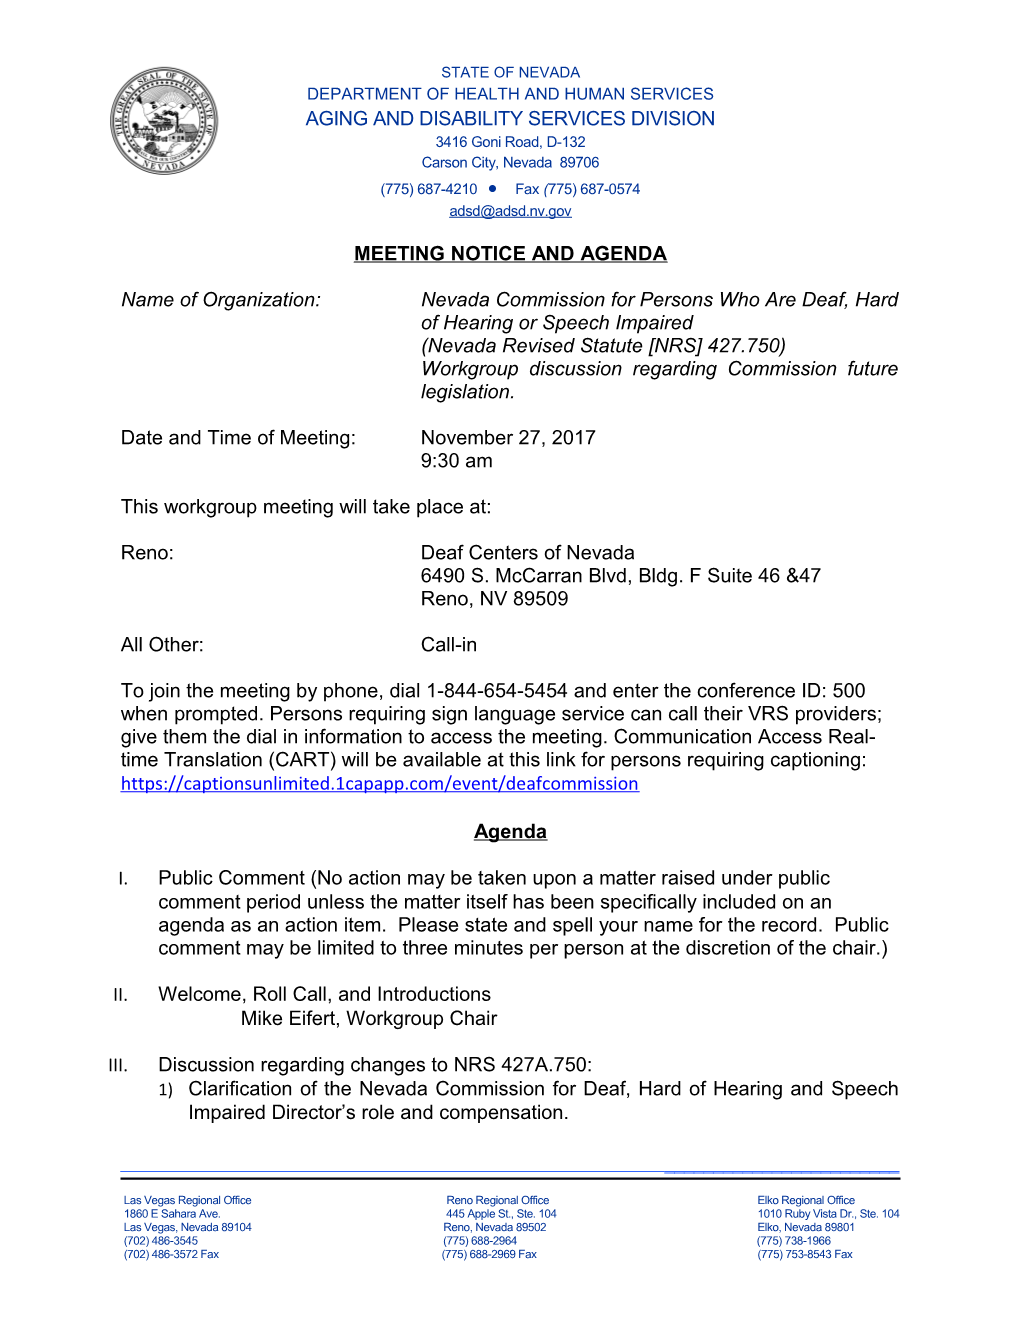 Meeting Notice and Agenda s6